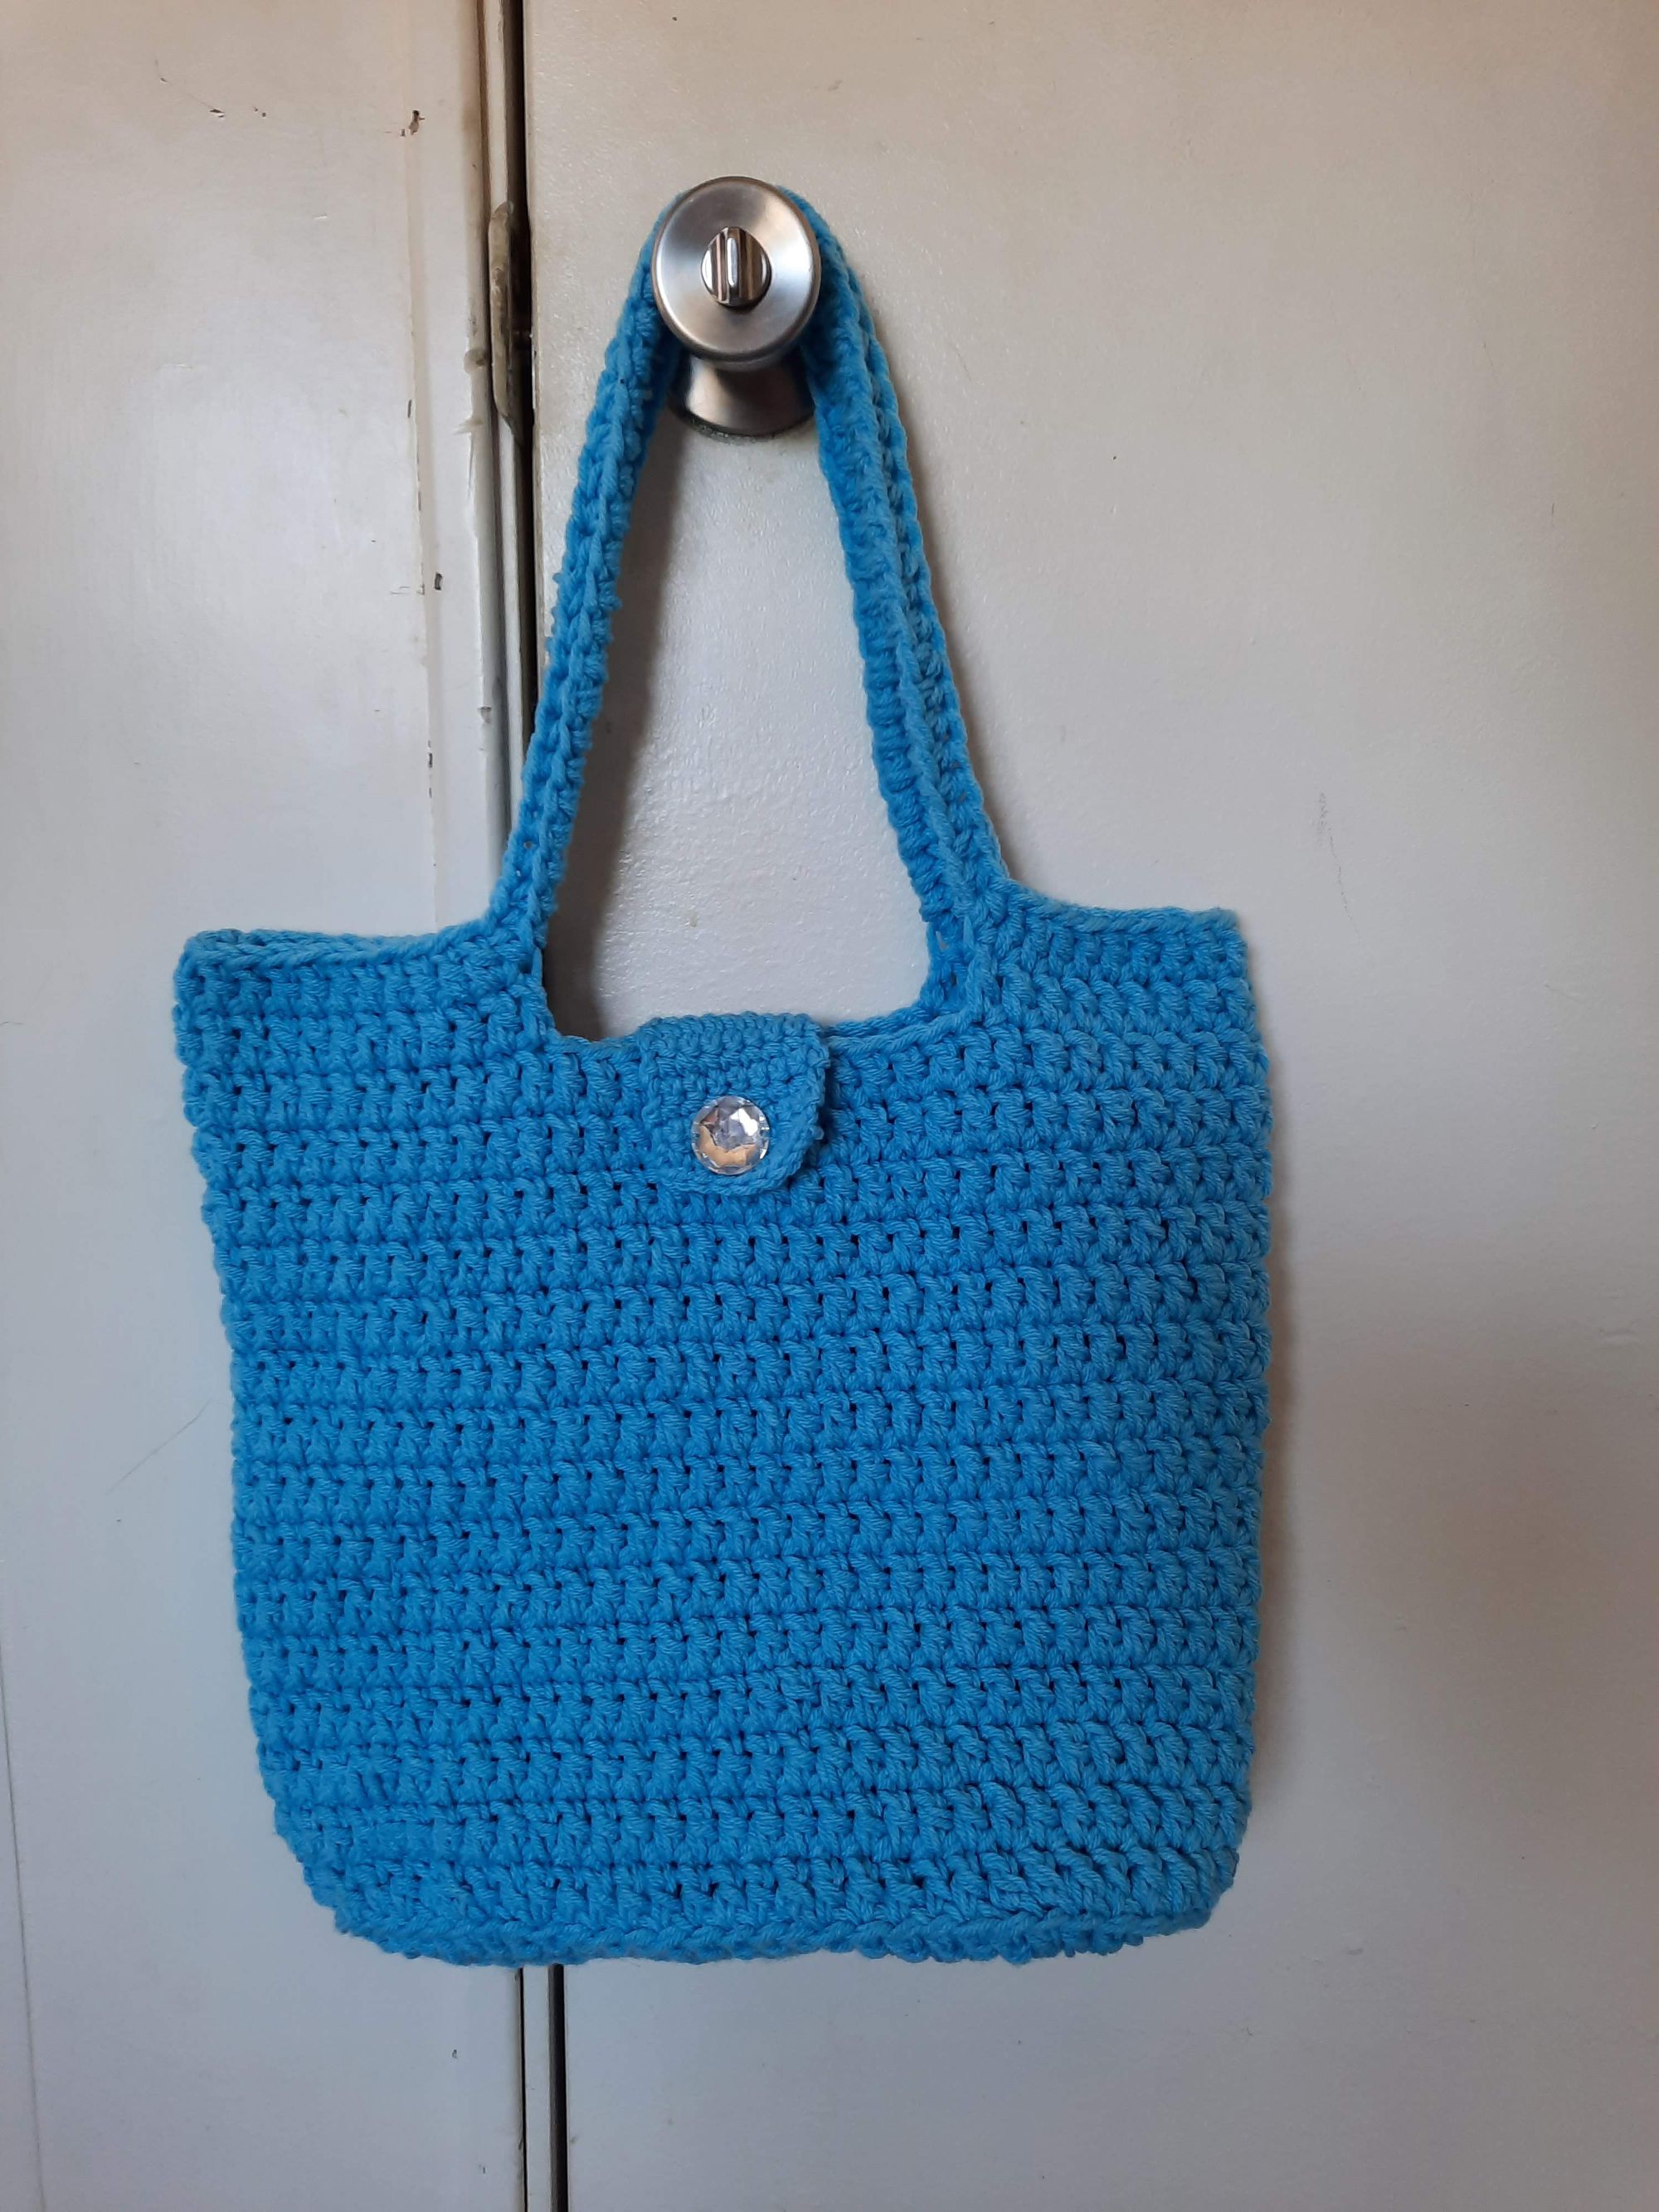 Blue Jeweled Tote Bag or Purse